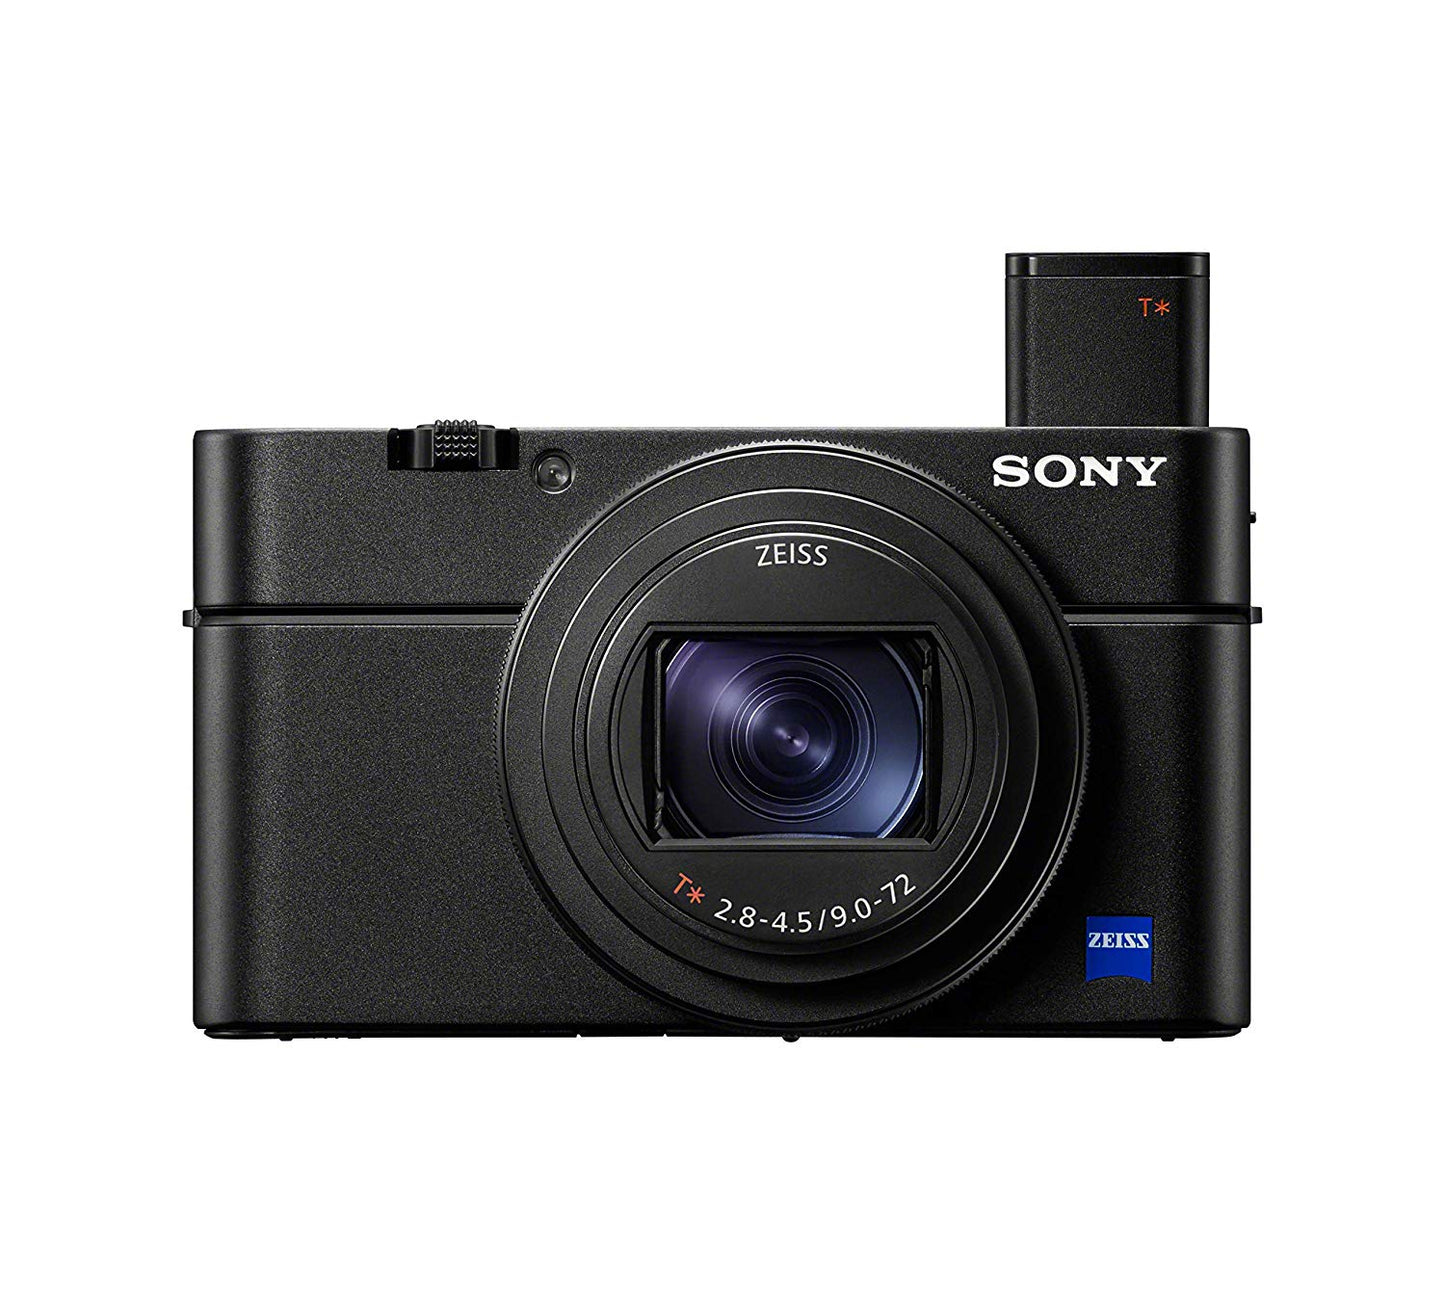 Sony DSCRX100M7/B Cyber-shot DSC-RX100 VII Digital Camera - Black